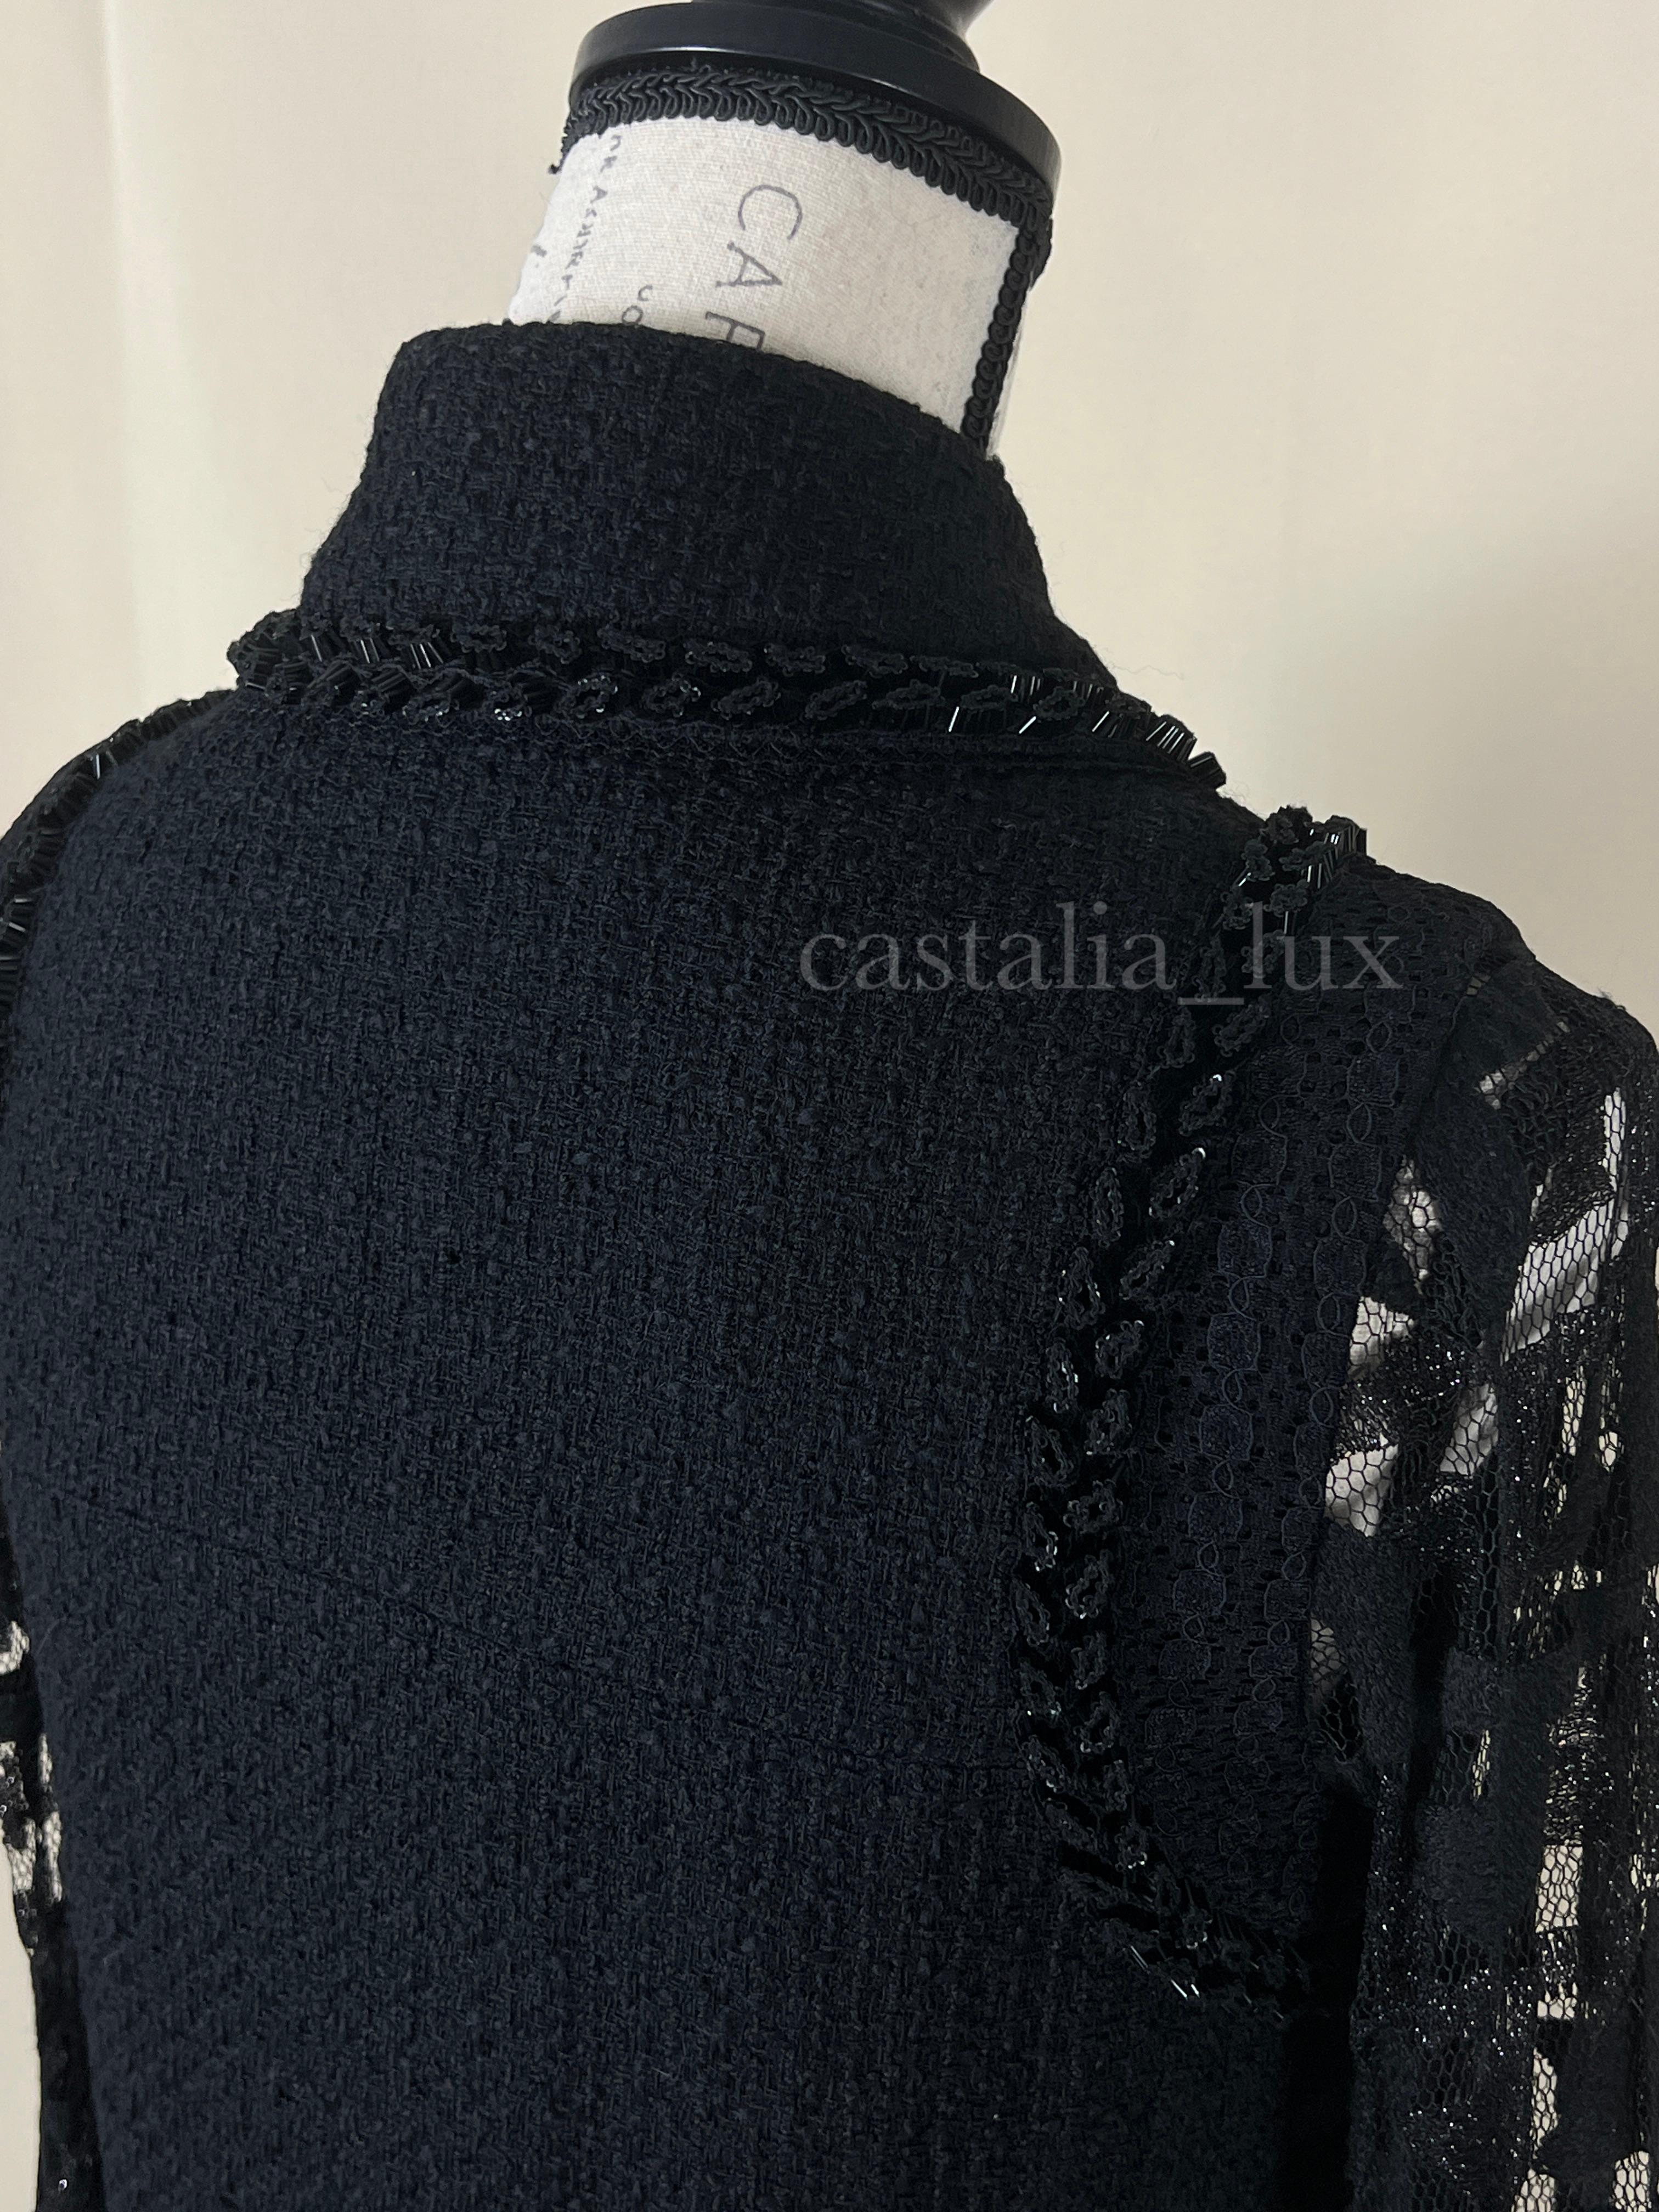 Chanel Paris / Miami CC Heart Buttons Black Tweed Jacket 9